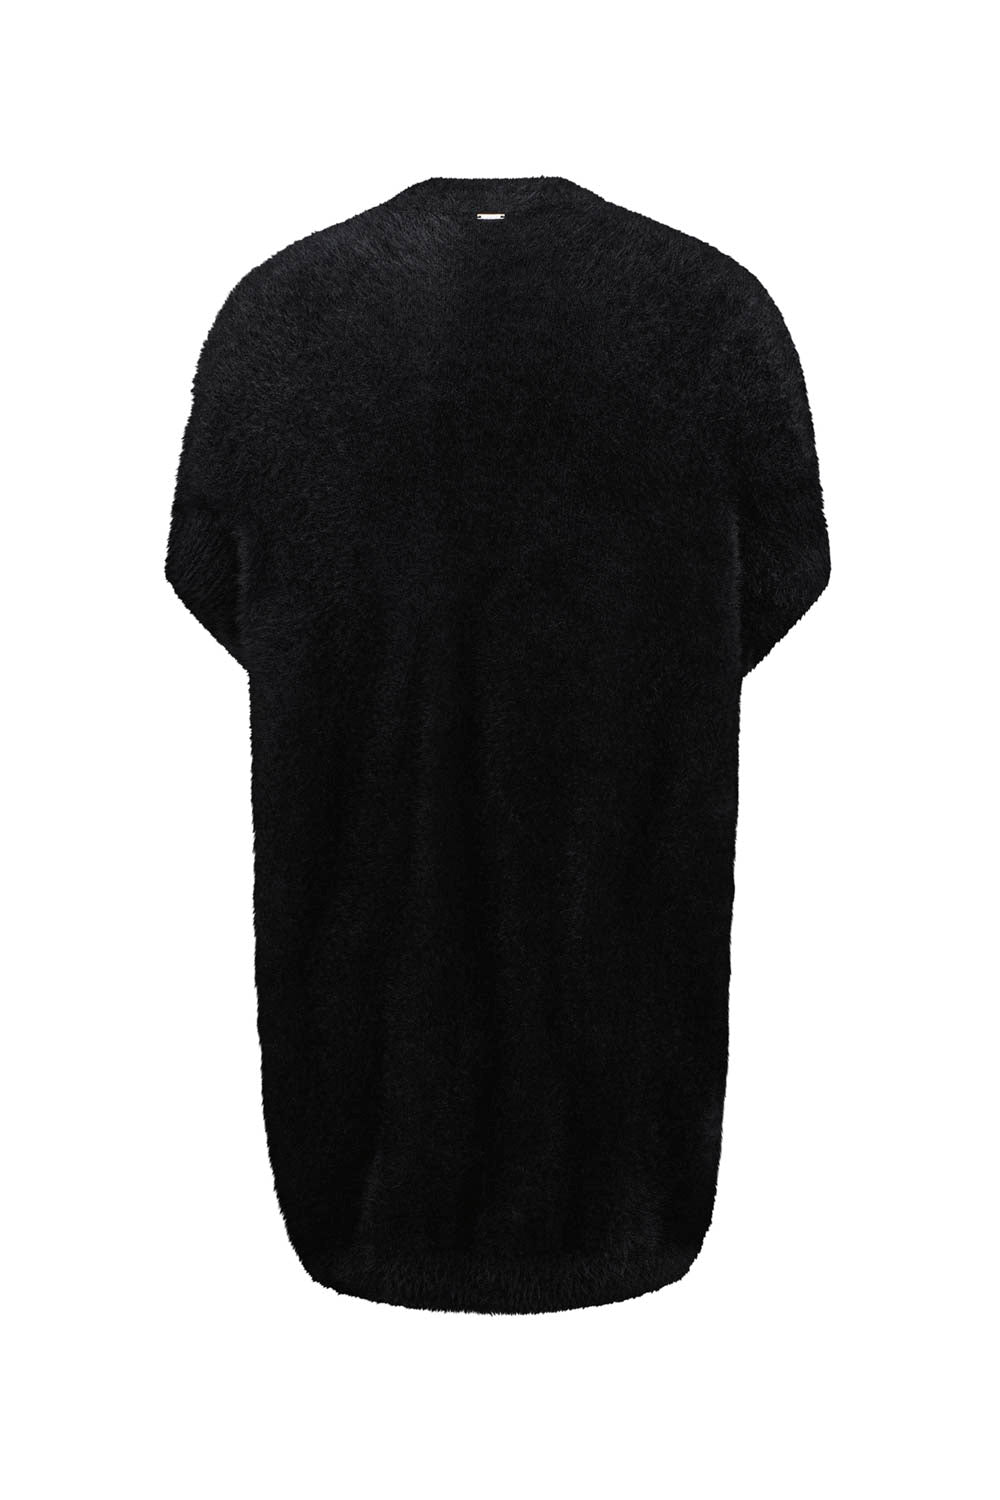 Emerson Vest - Black - Sweater VERGE